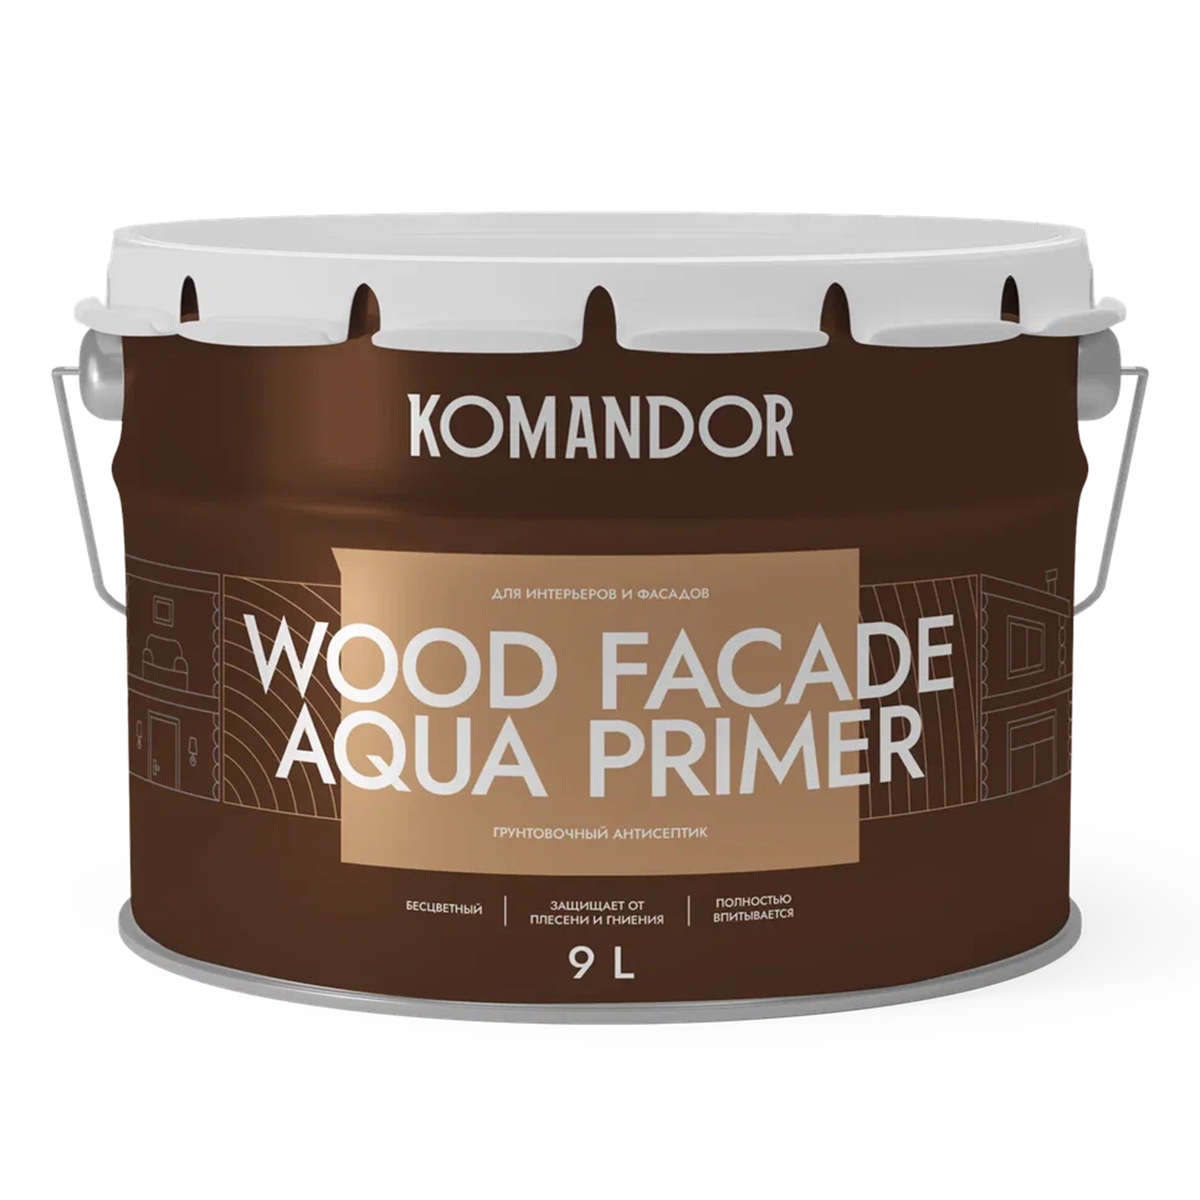 Грунт-антисептик для дерева Komandor Wood Facade Aqua Primer, 9 л антисептик грунт для osb плит prosept osb base 5 л